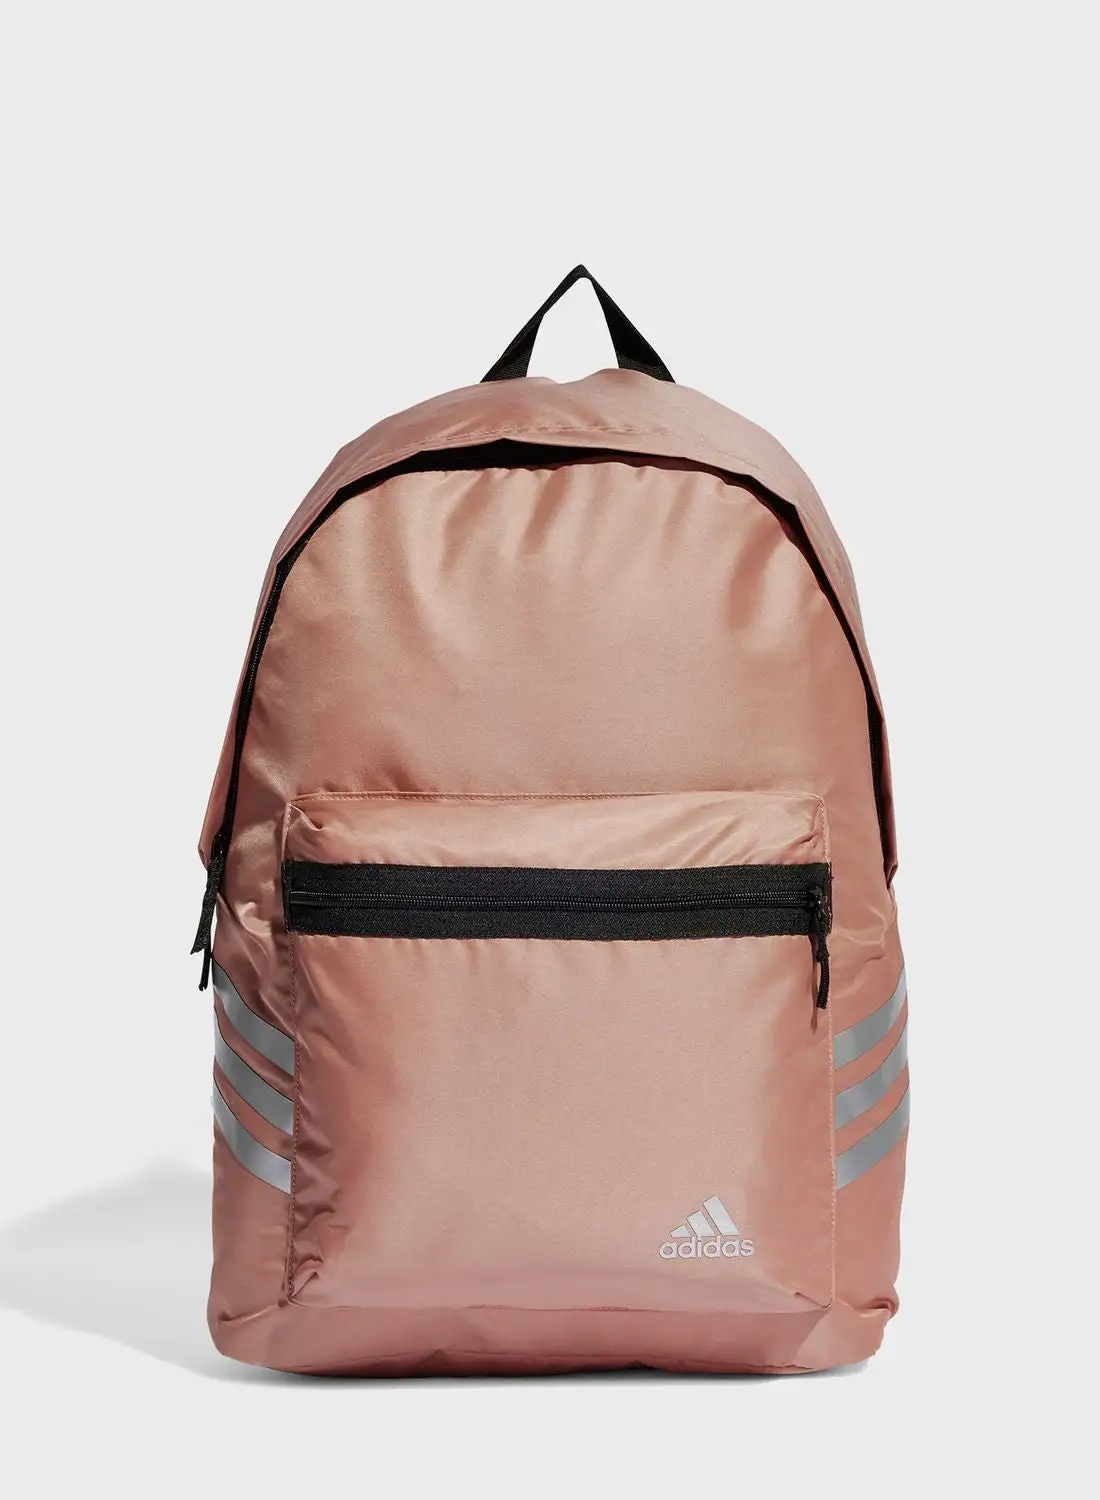 Adidas 3 Stripe Glam Backpack